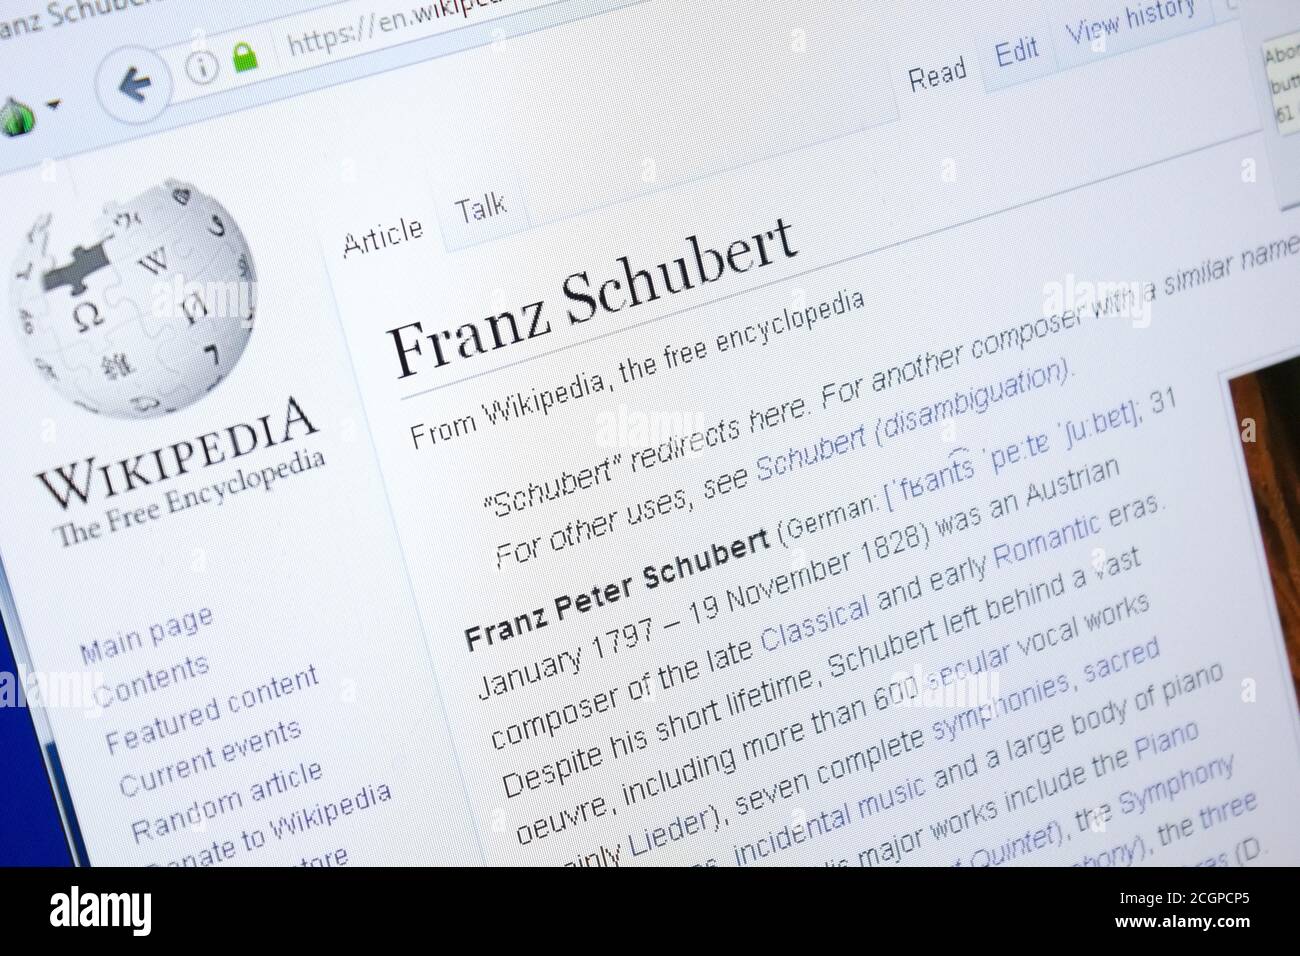 Franz Schubert - Wikipedia, the free encyclopedia